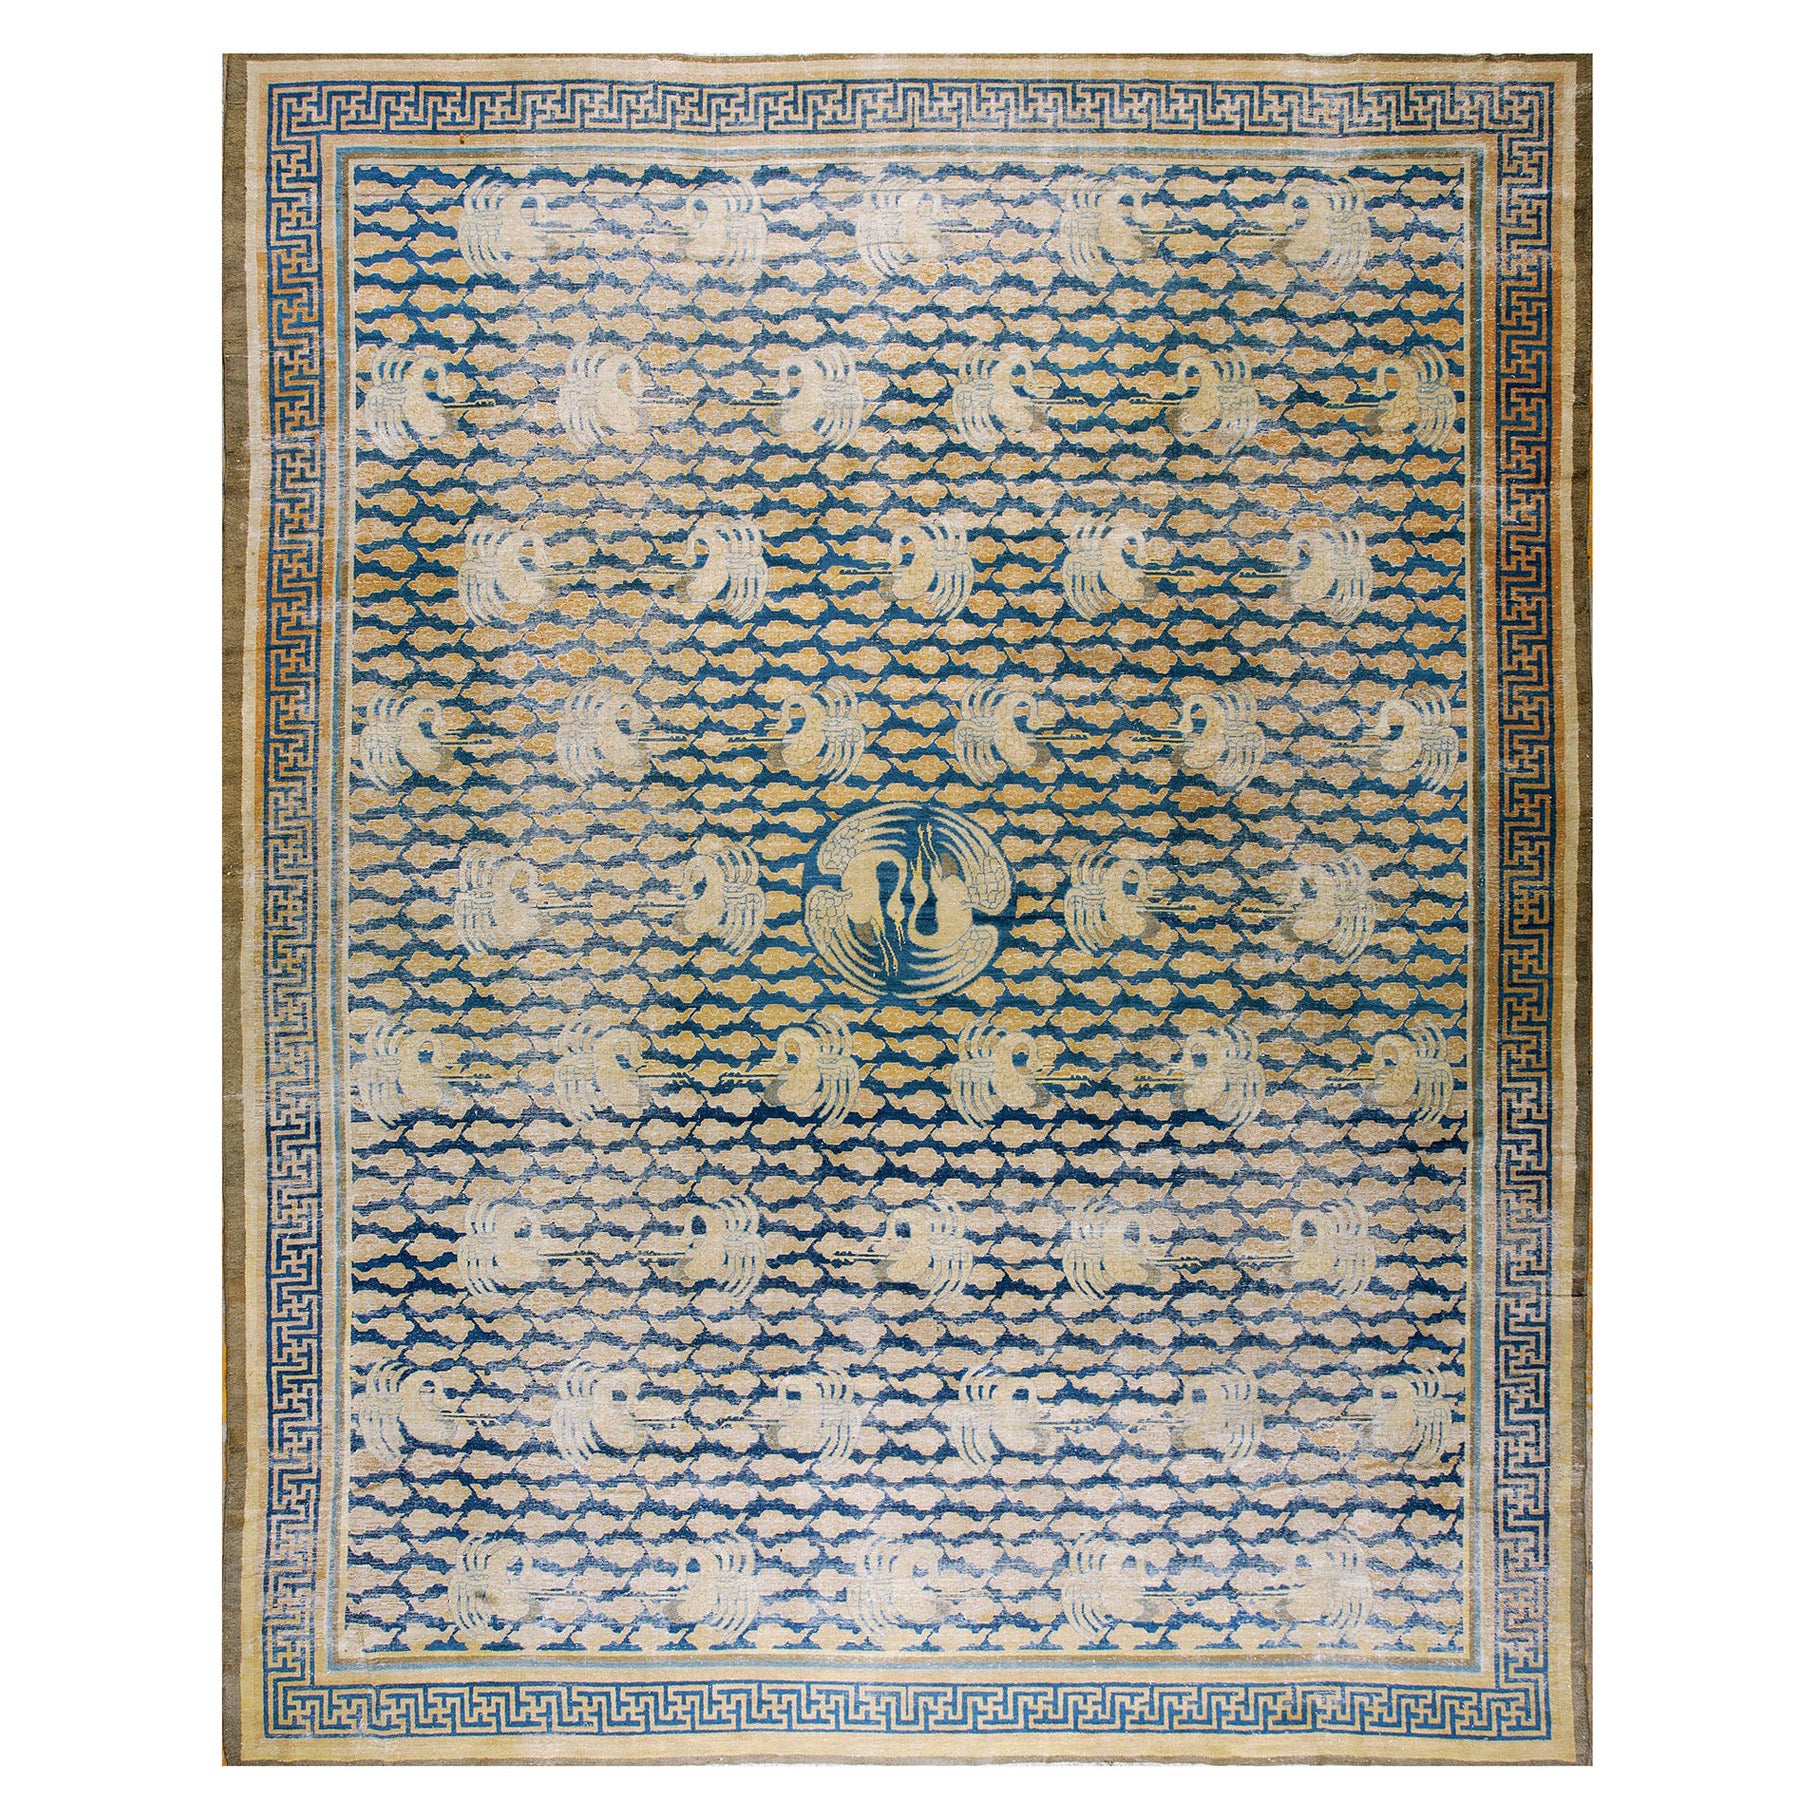 Late 19th Century Chinese Carpet ( 11'6'' x 14'6'' - 350 x 442 )